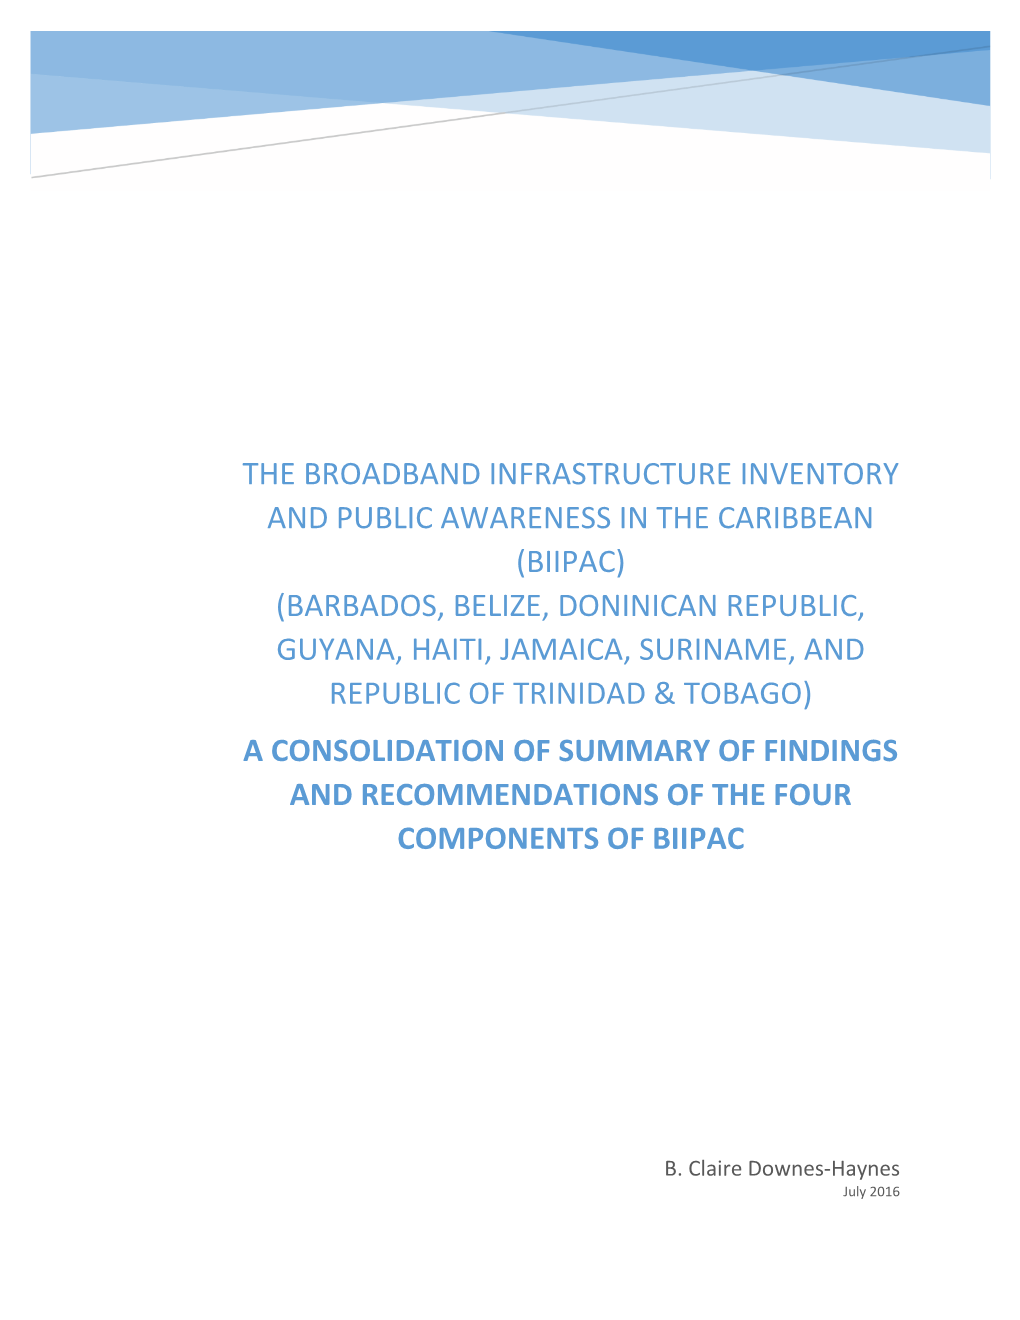 The Broadband Infrastructure Inventory